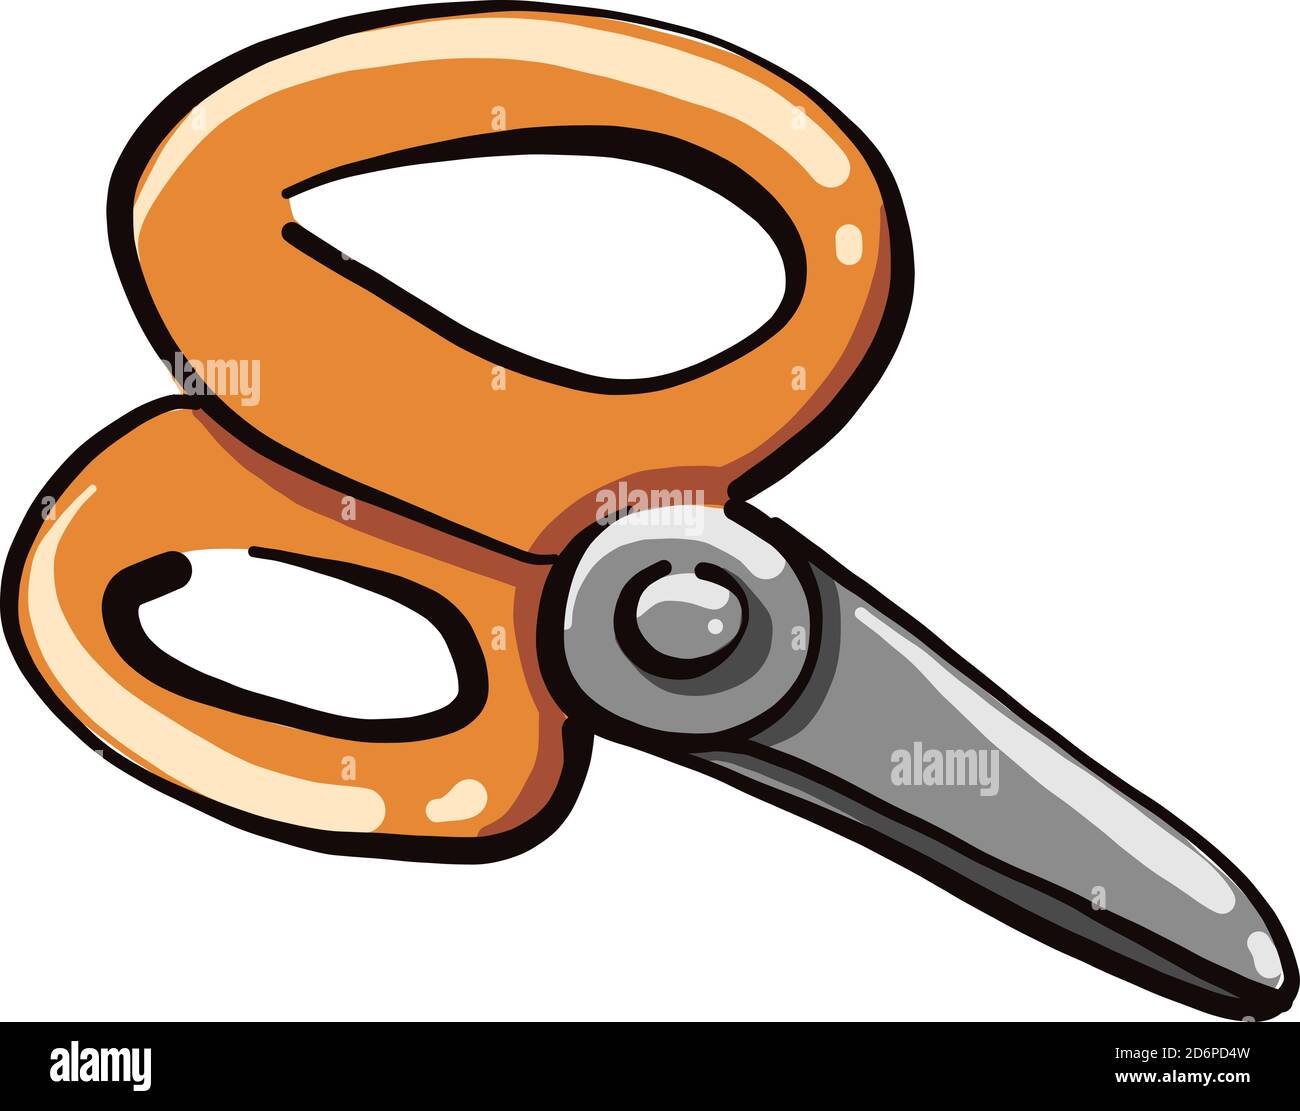 Orange Scissors For Office School Or Handiwork 3d Icon Stock Illustration -  Download Image Now - iStock